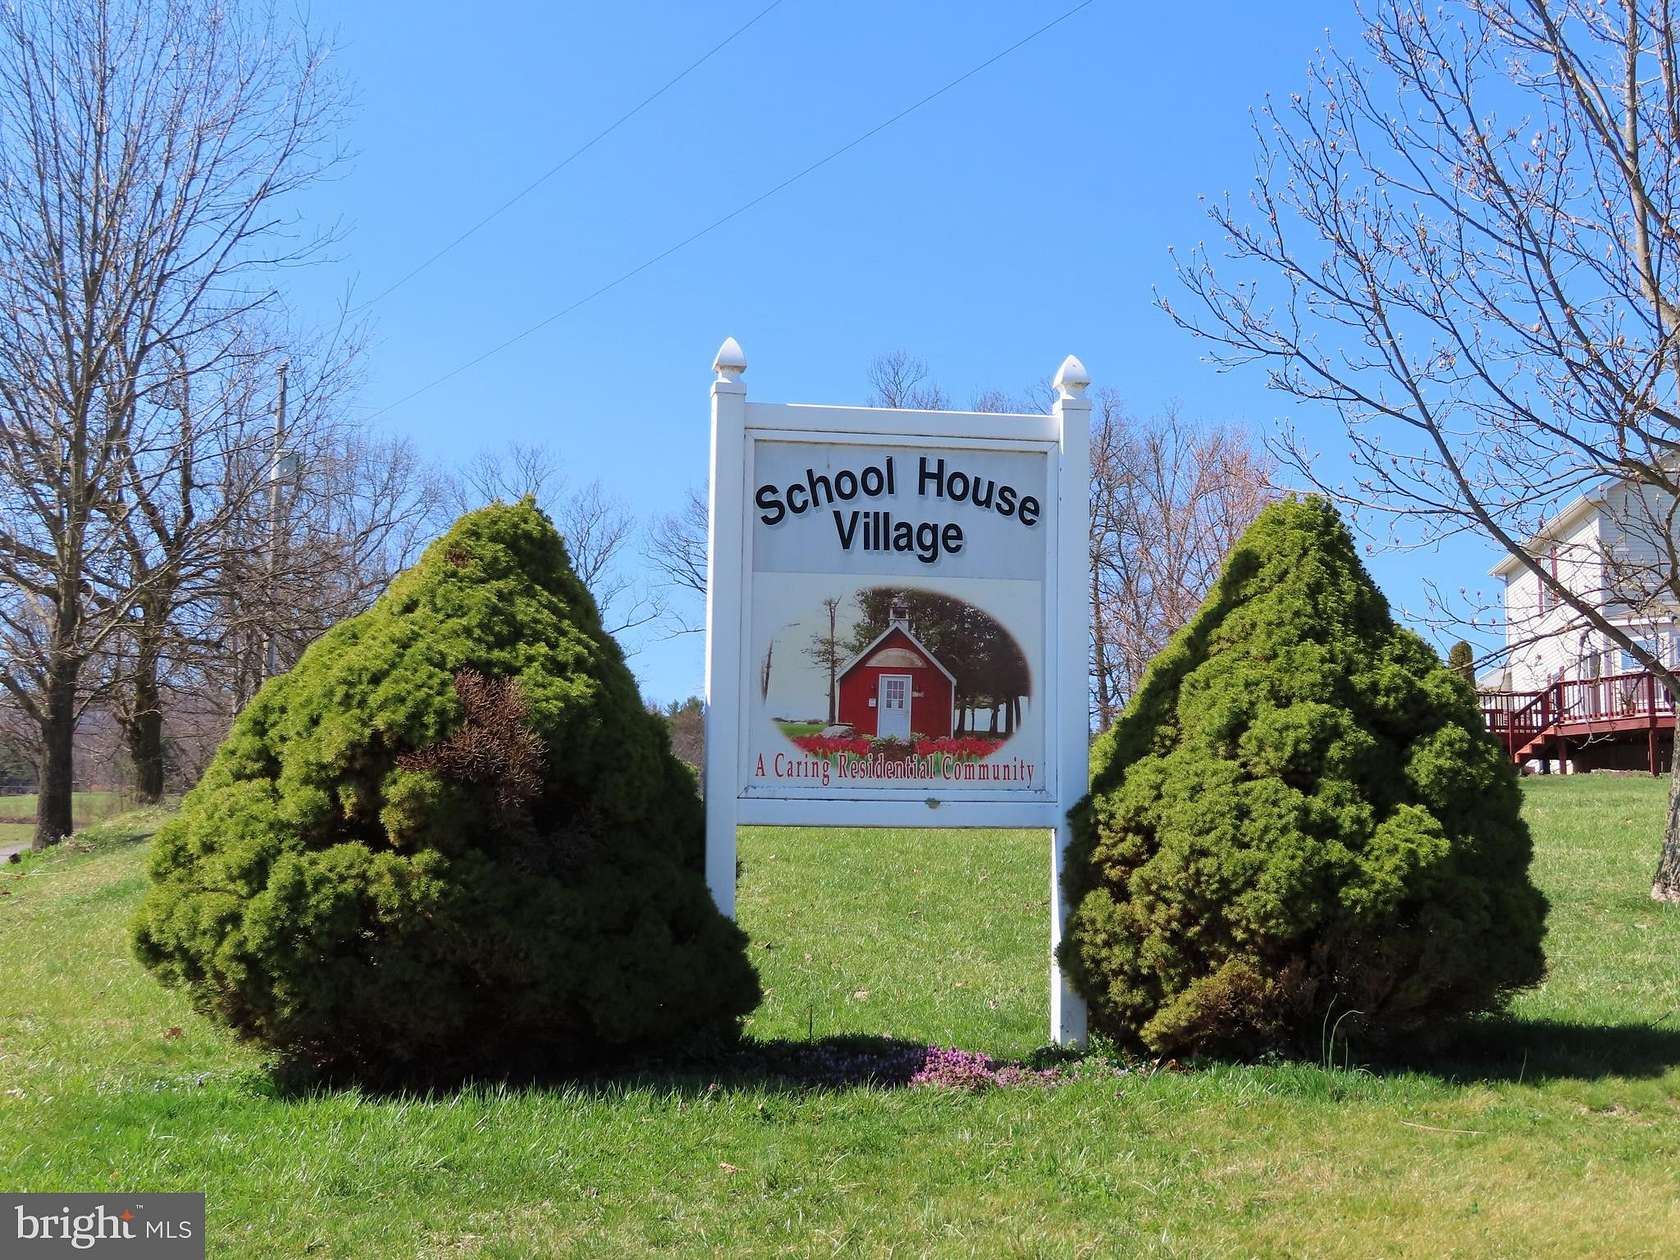 6.4 Acres of Residential Land for Sale in Harrisonville, Pennsylvania